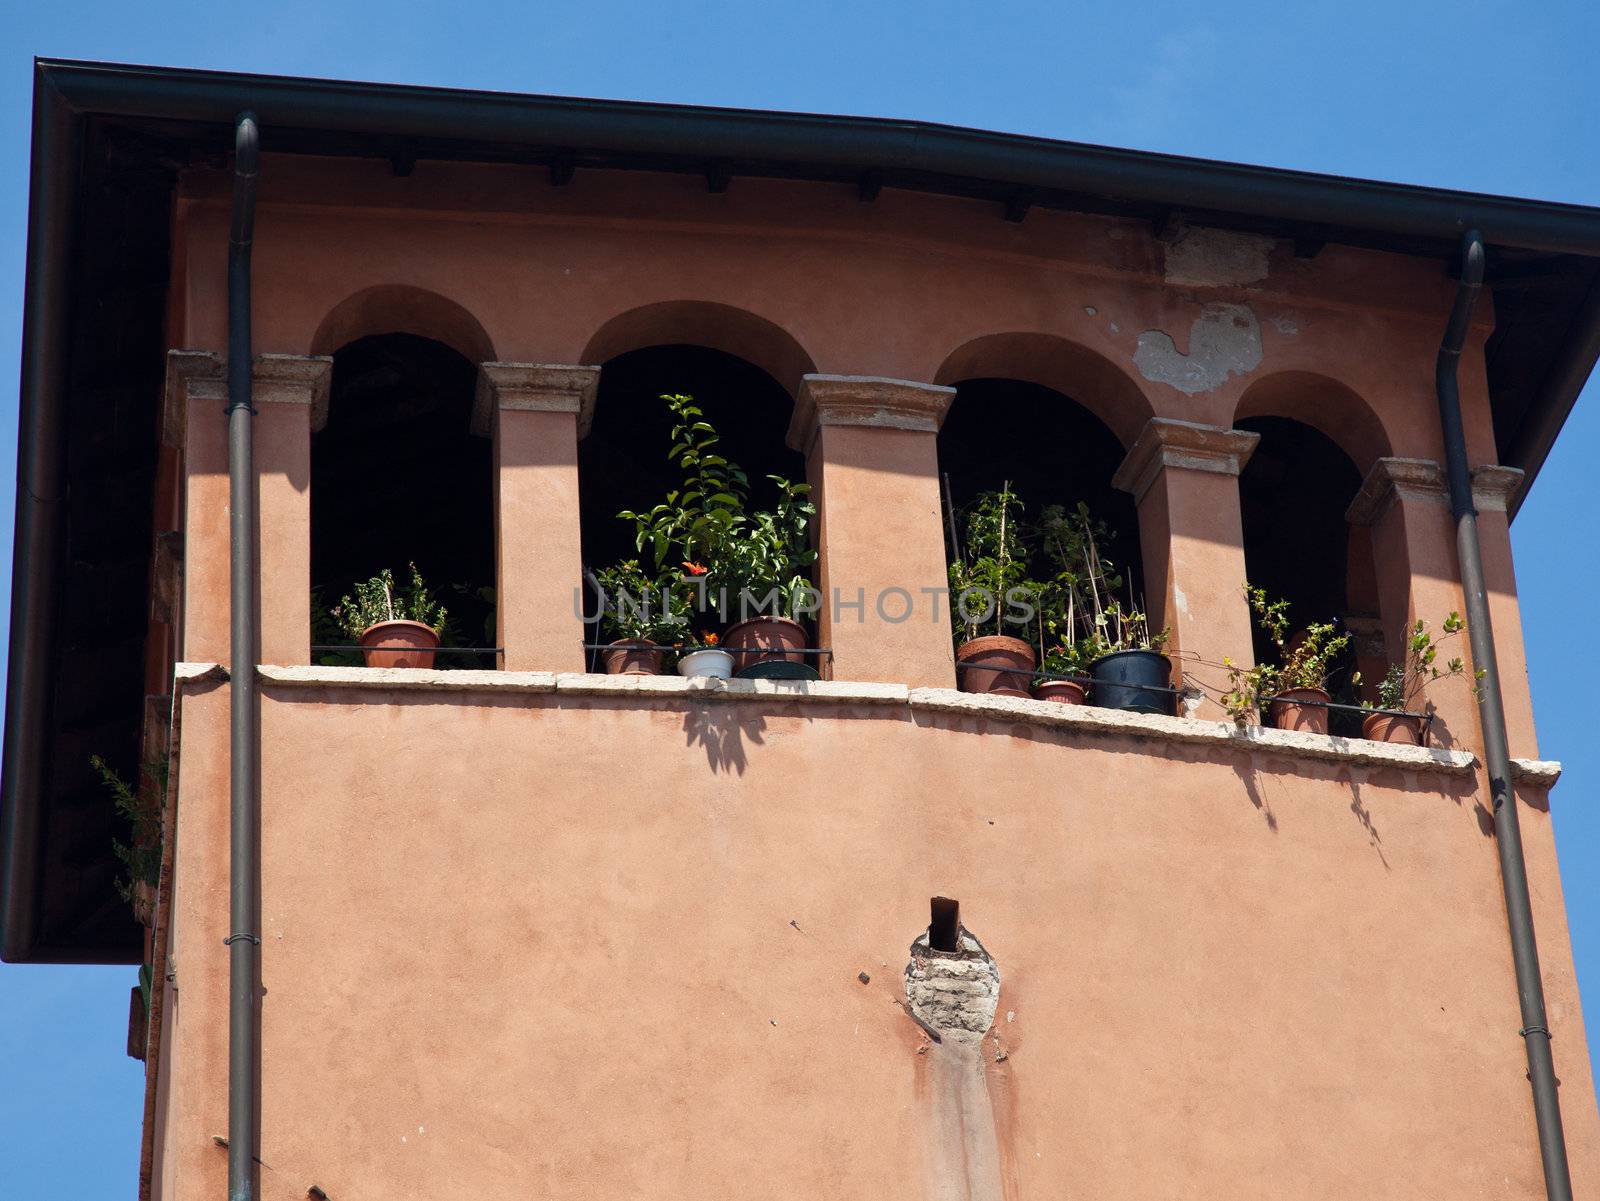 Old windows in Verona by steheap